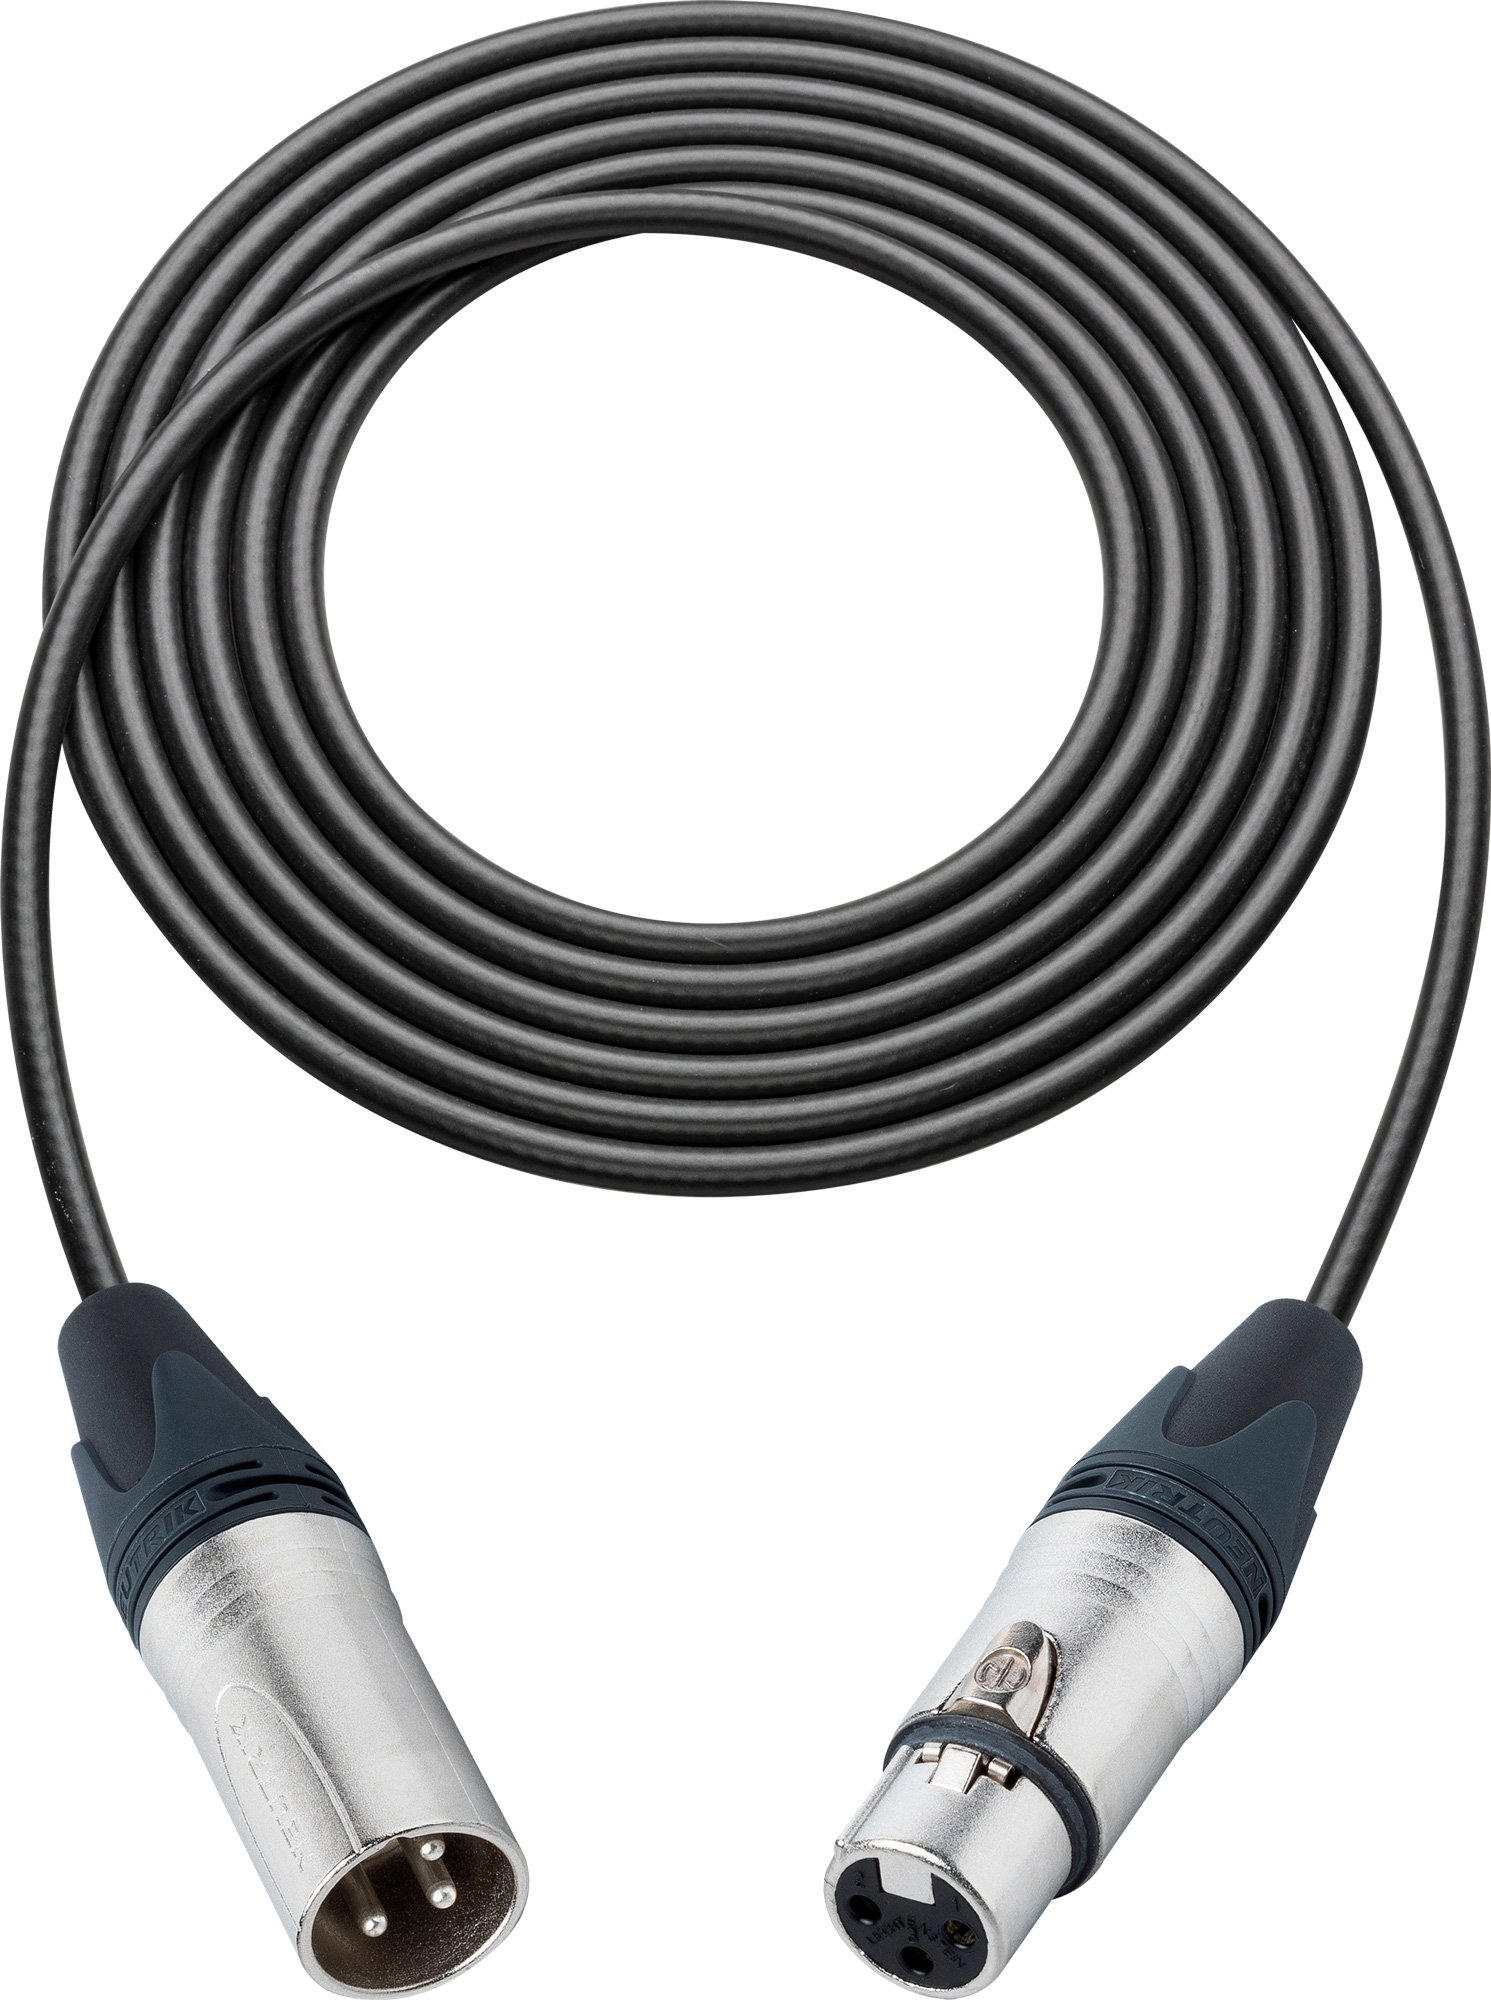 XLR to XLR Cables